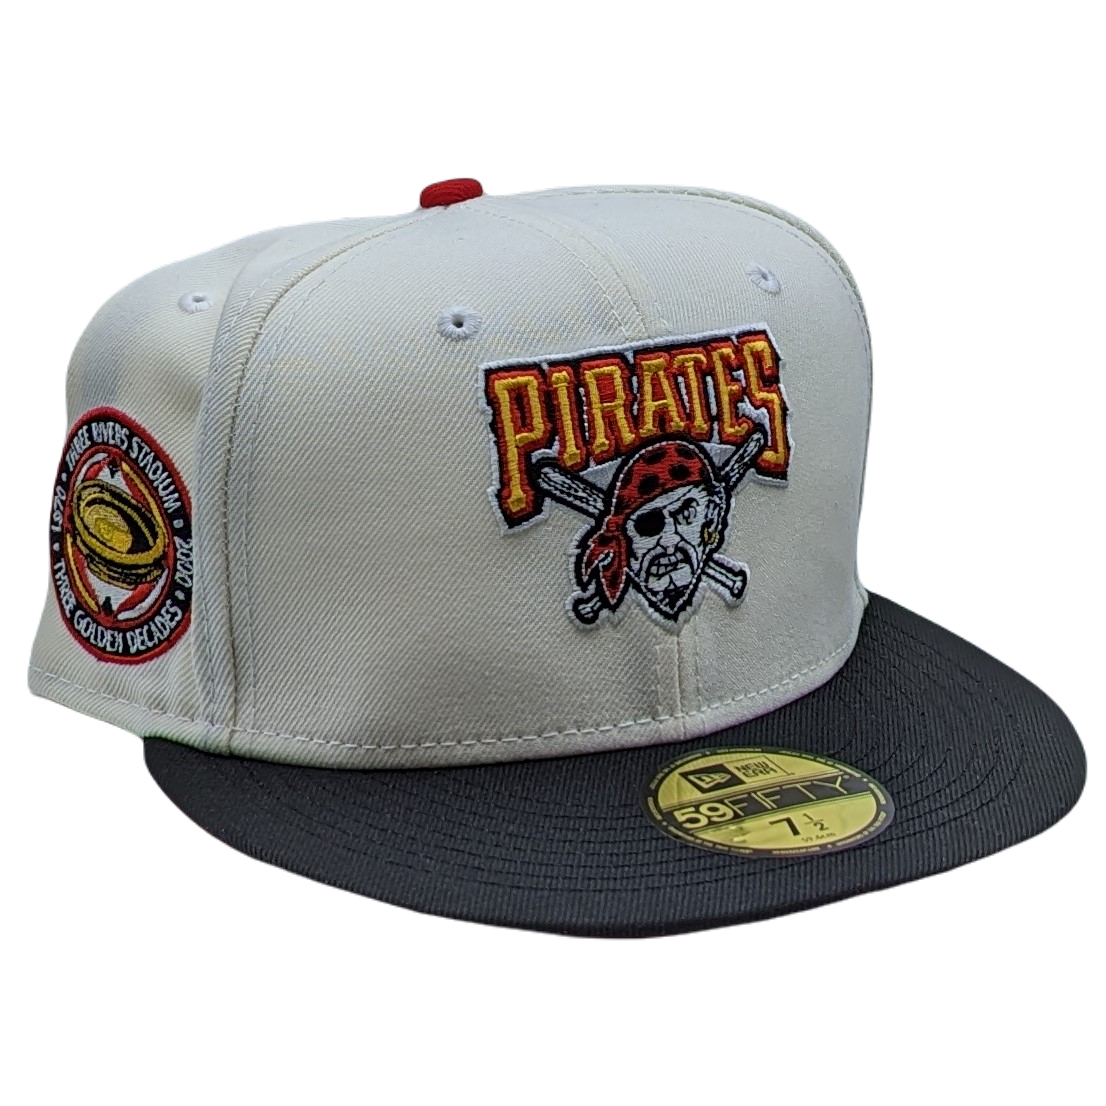 Pittsburgh Pirates Hat Baseball Cap Fitted 7 5/8 New Era MLB